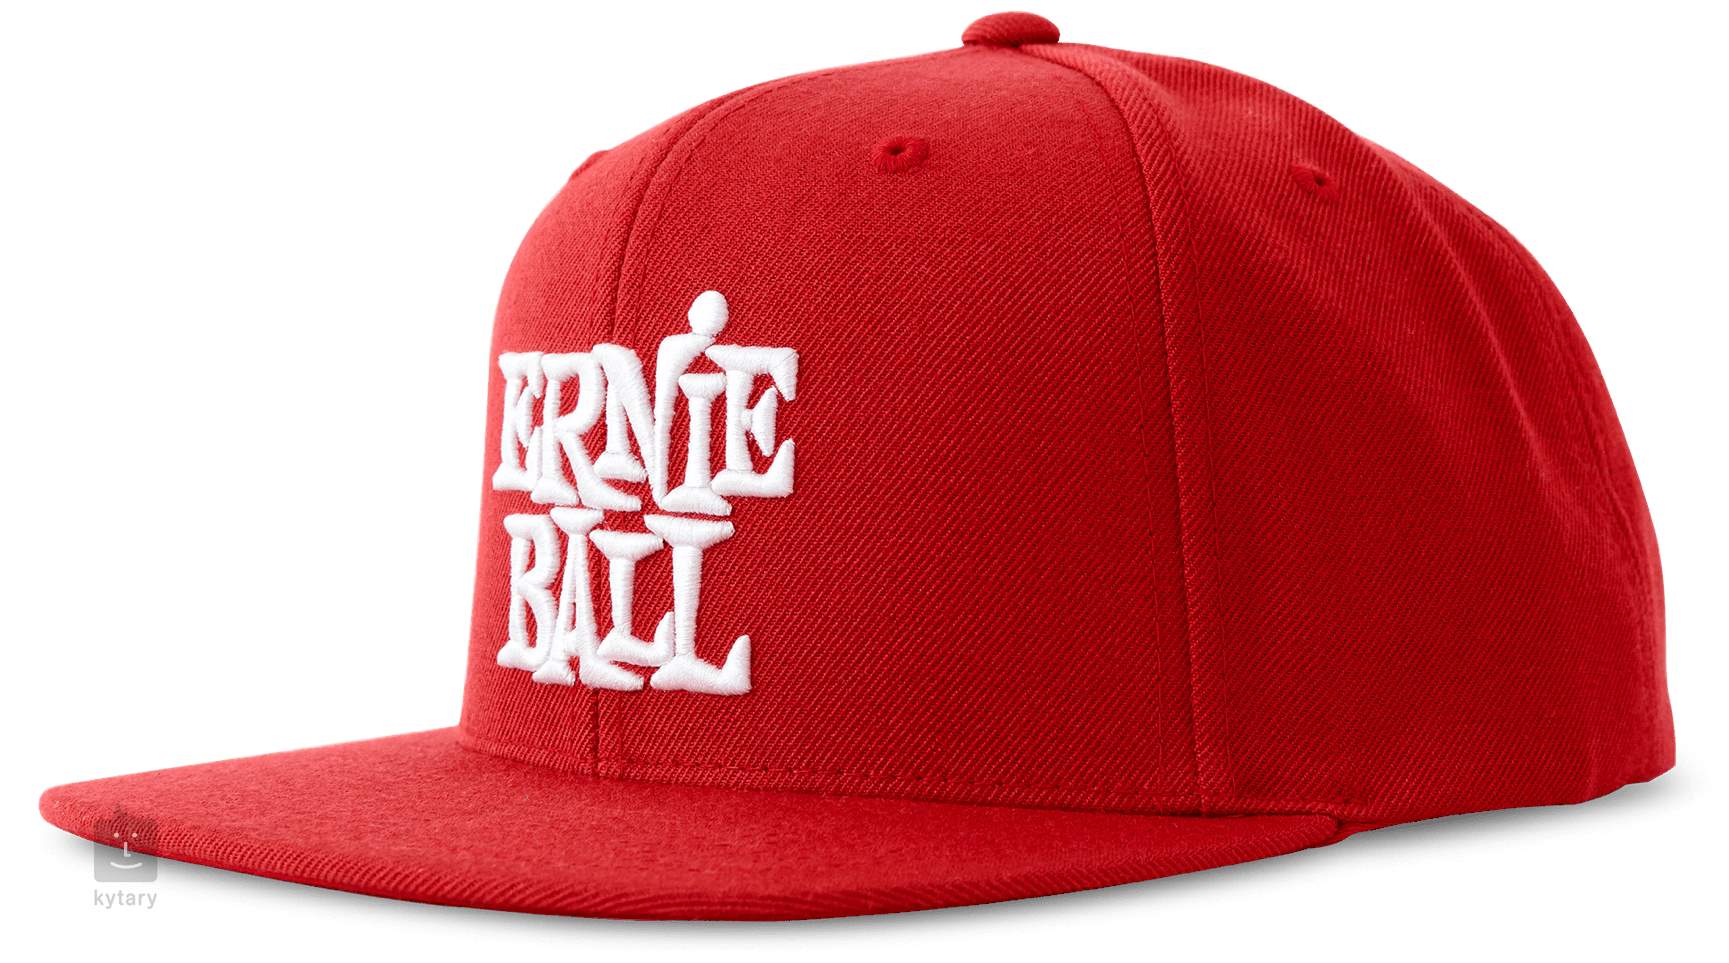 ERNIE BALL Stacked Logo Hat Red Baseball Cap